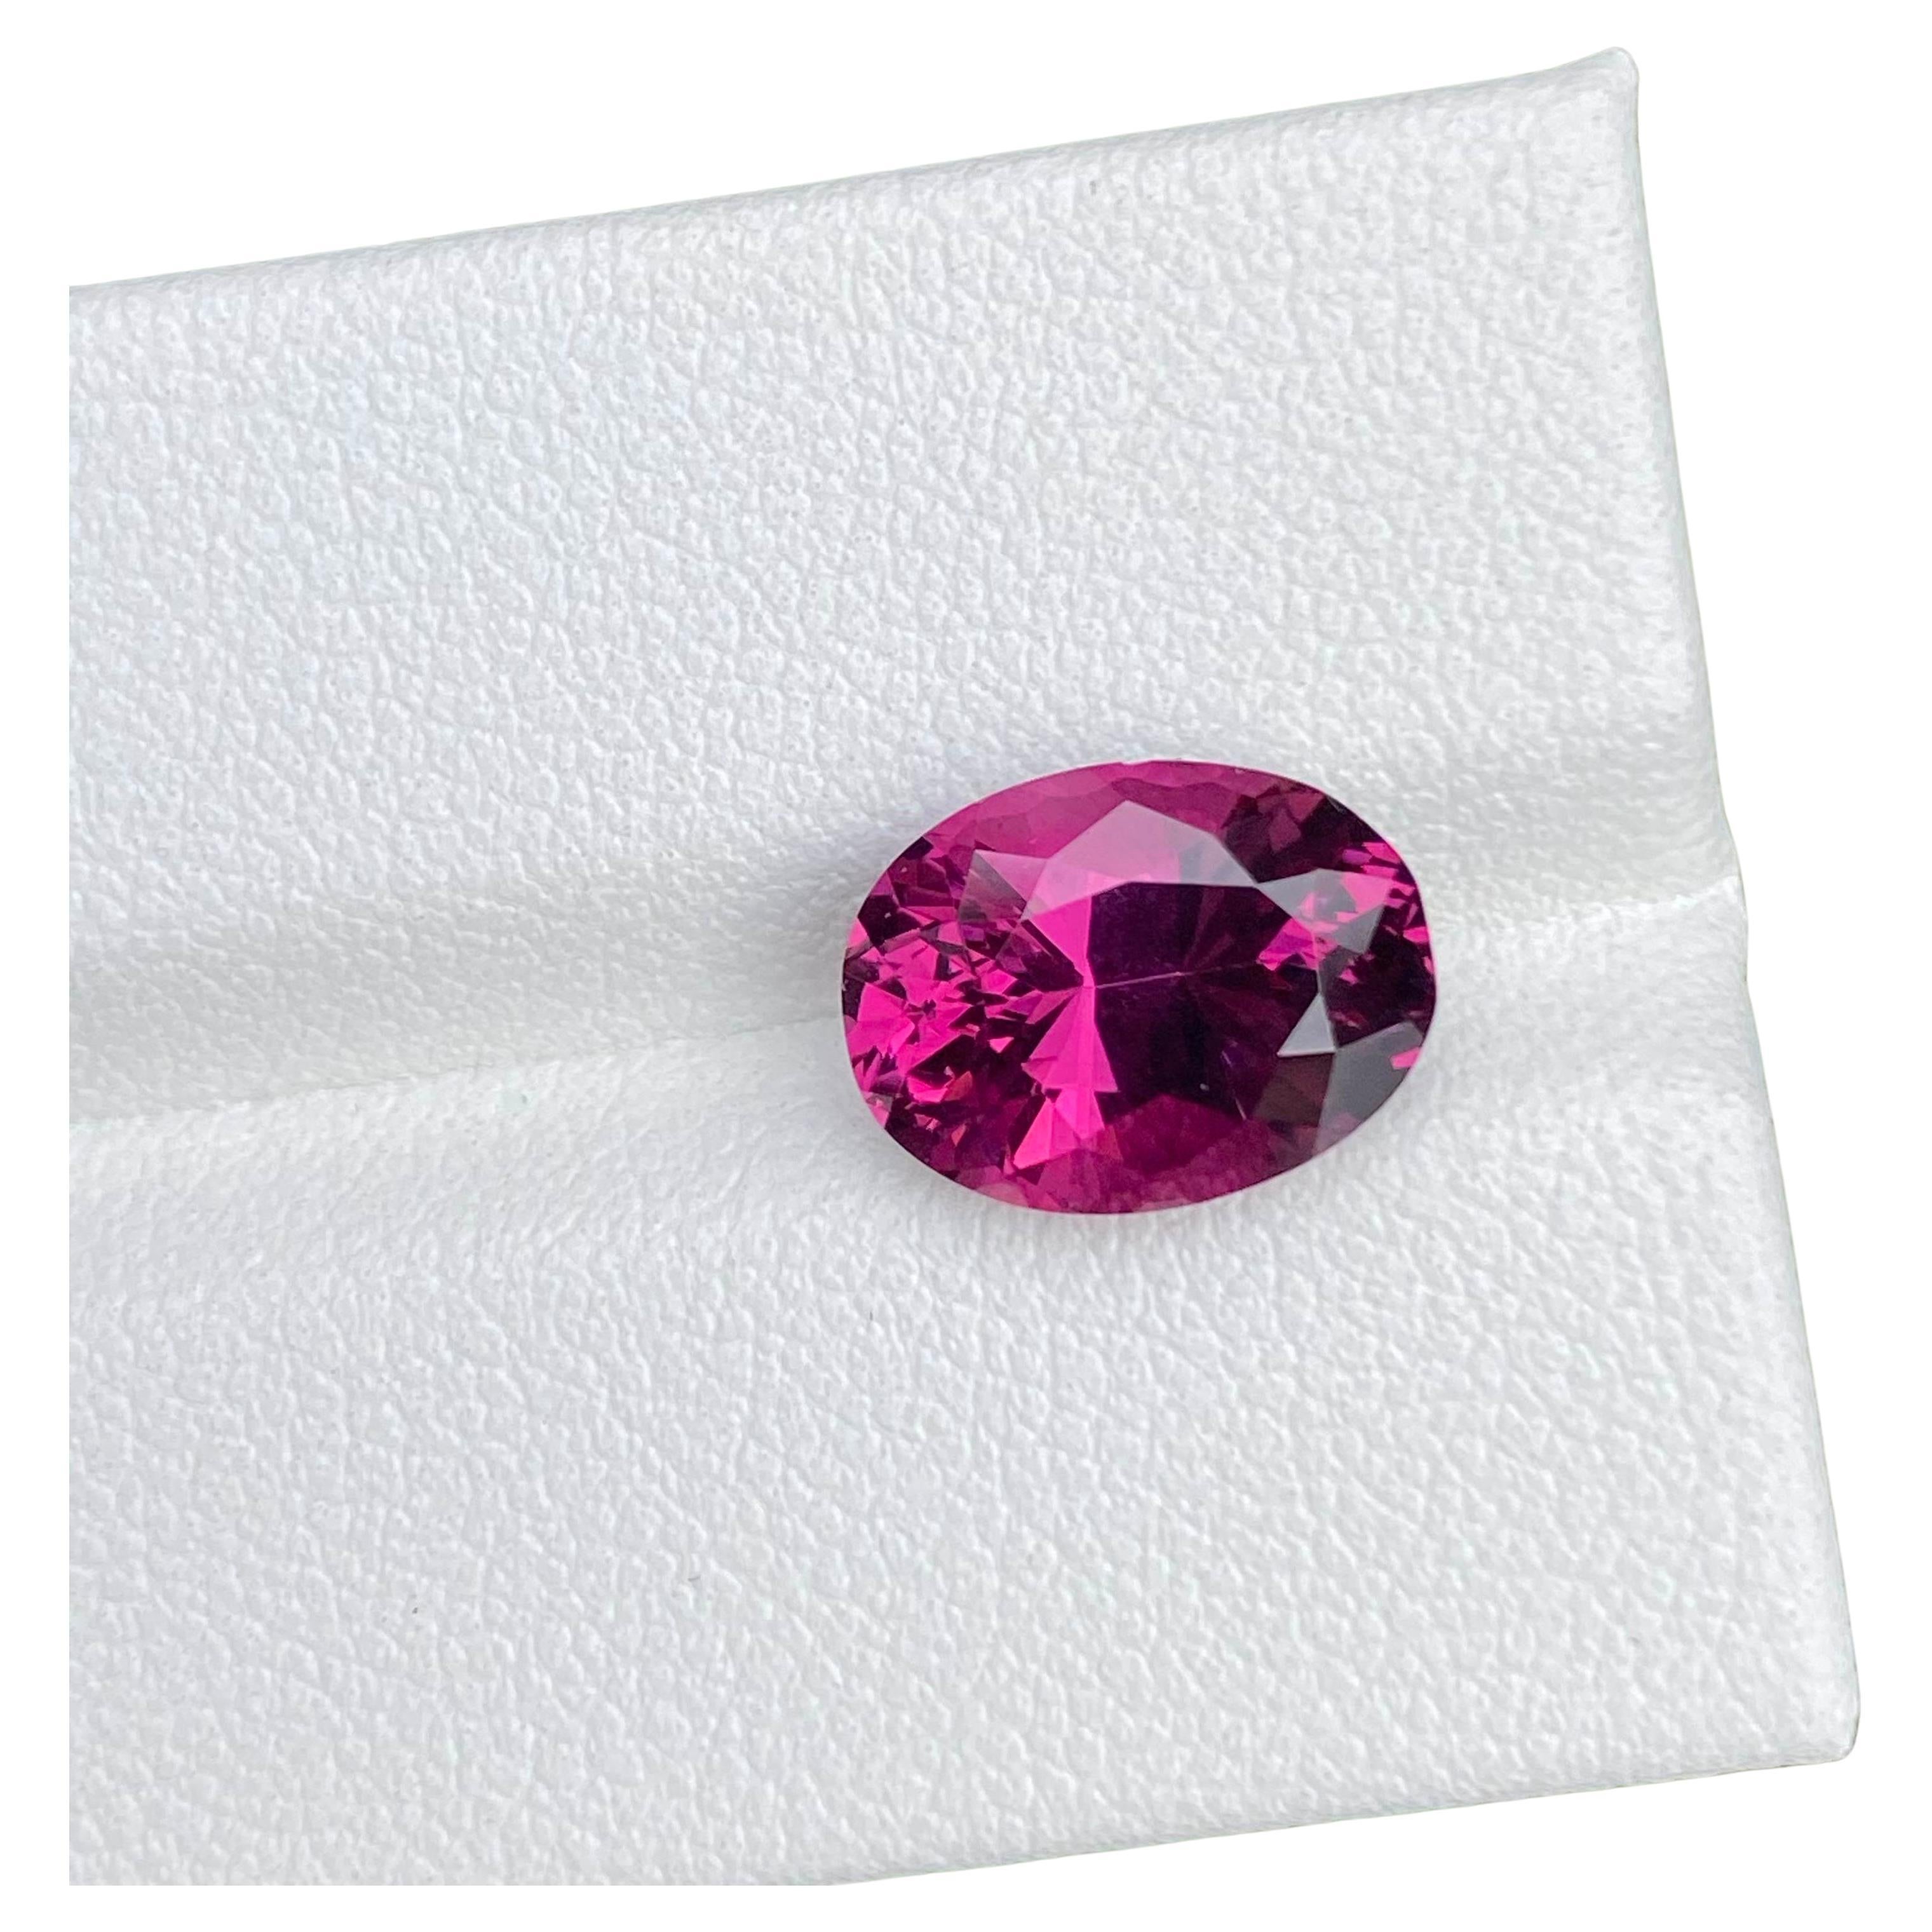 Pink Garnet Ring Gemstone 4.25 Carat Loose Gemstone Ceylon Origin For Sale